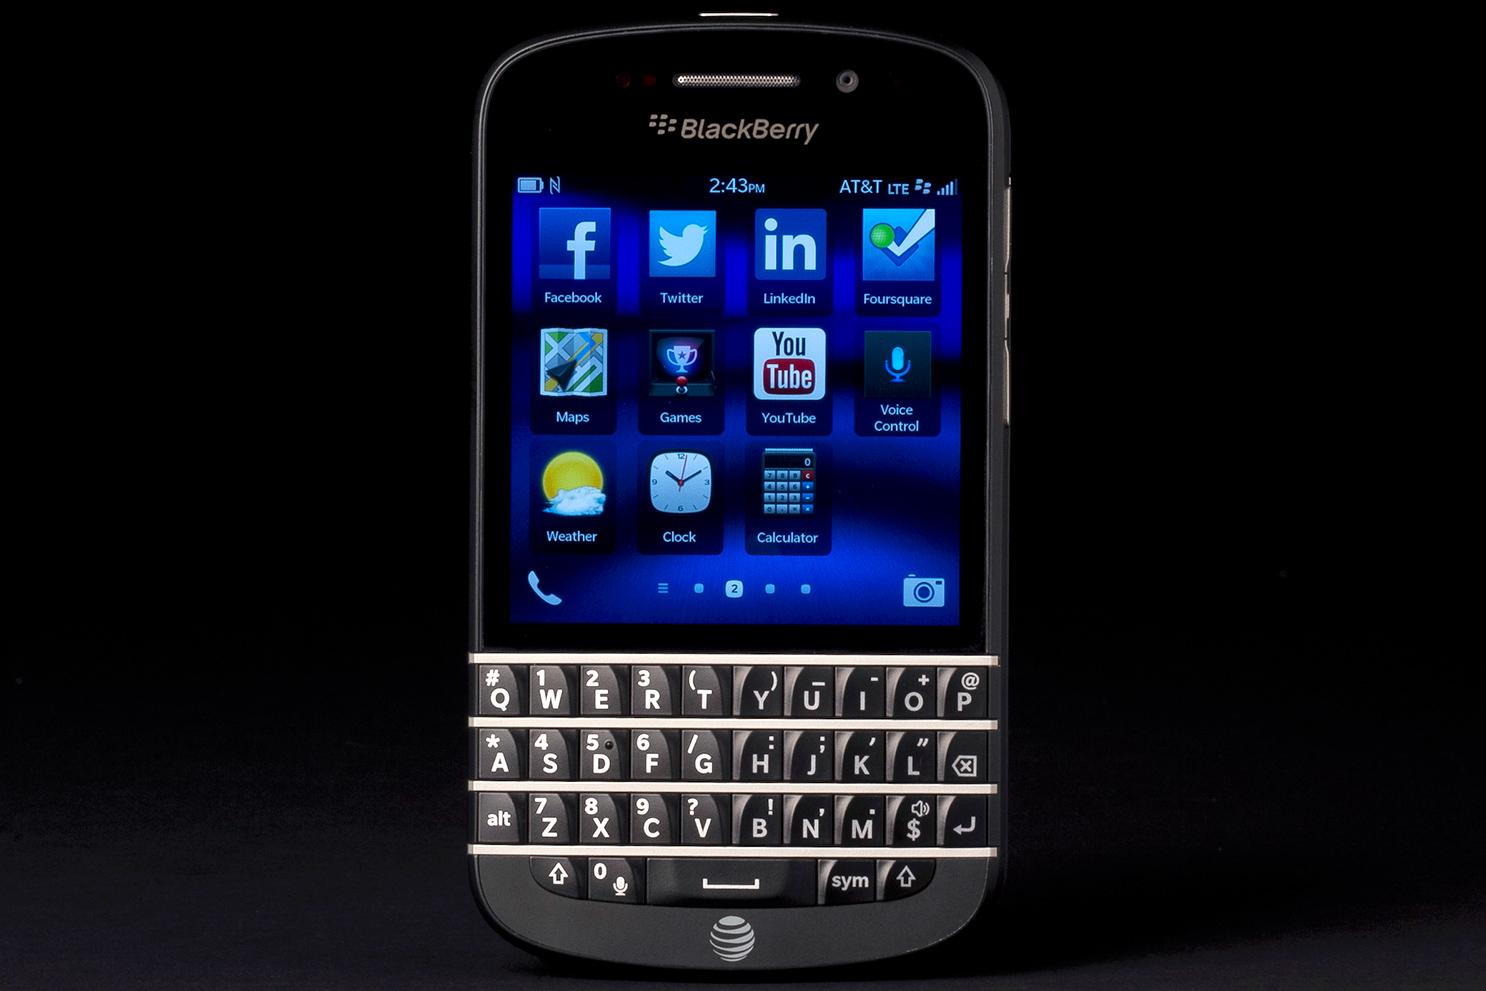 blackberry q10 black